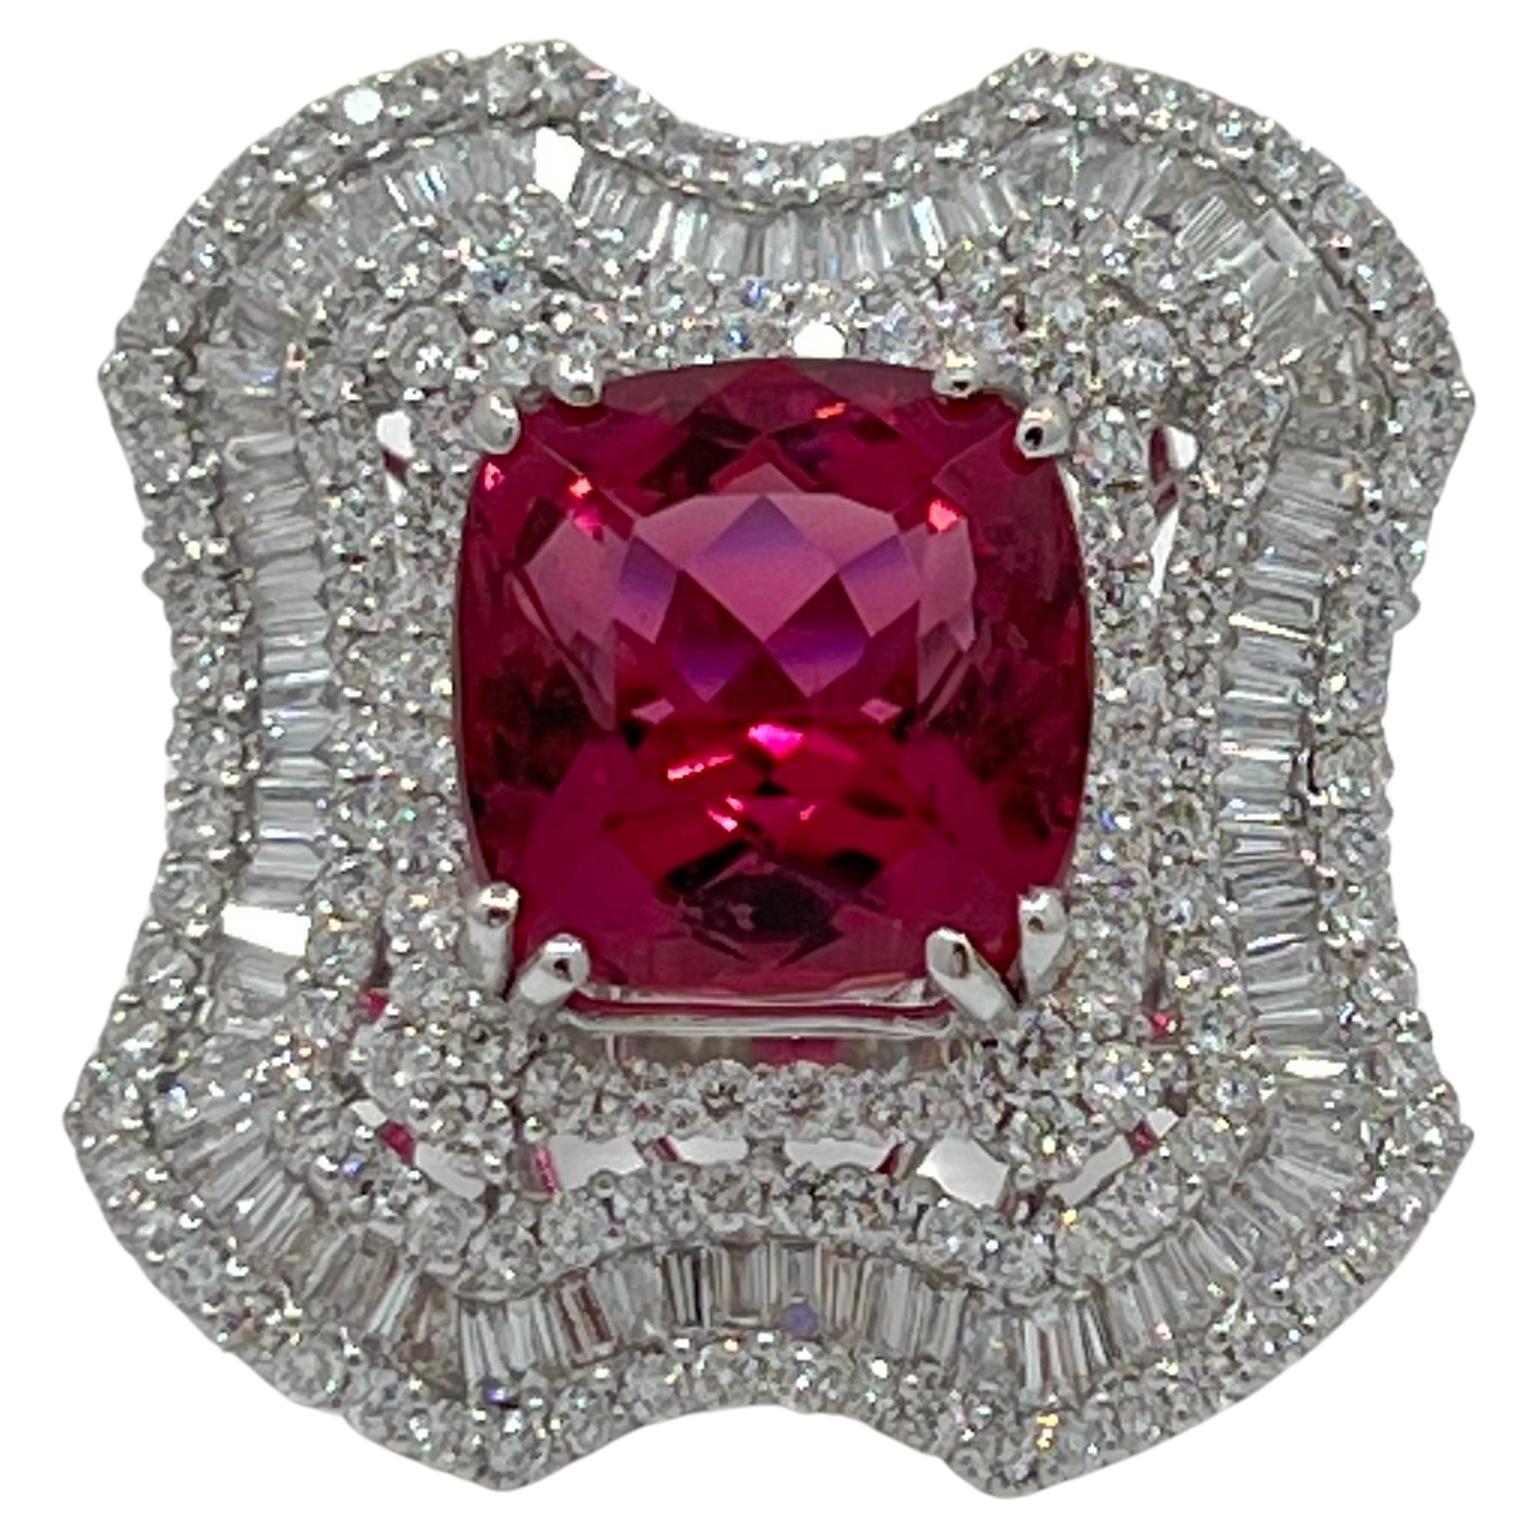 Exquisite 20.56 Carat Vivid Pink Rubellite and Diamond Ballerina Style 18K Ring